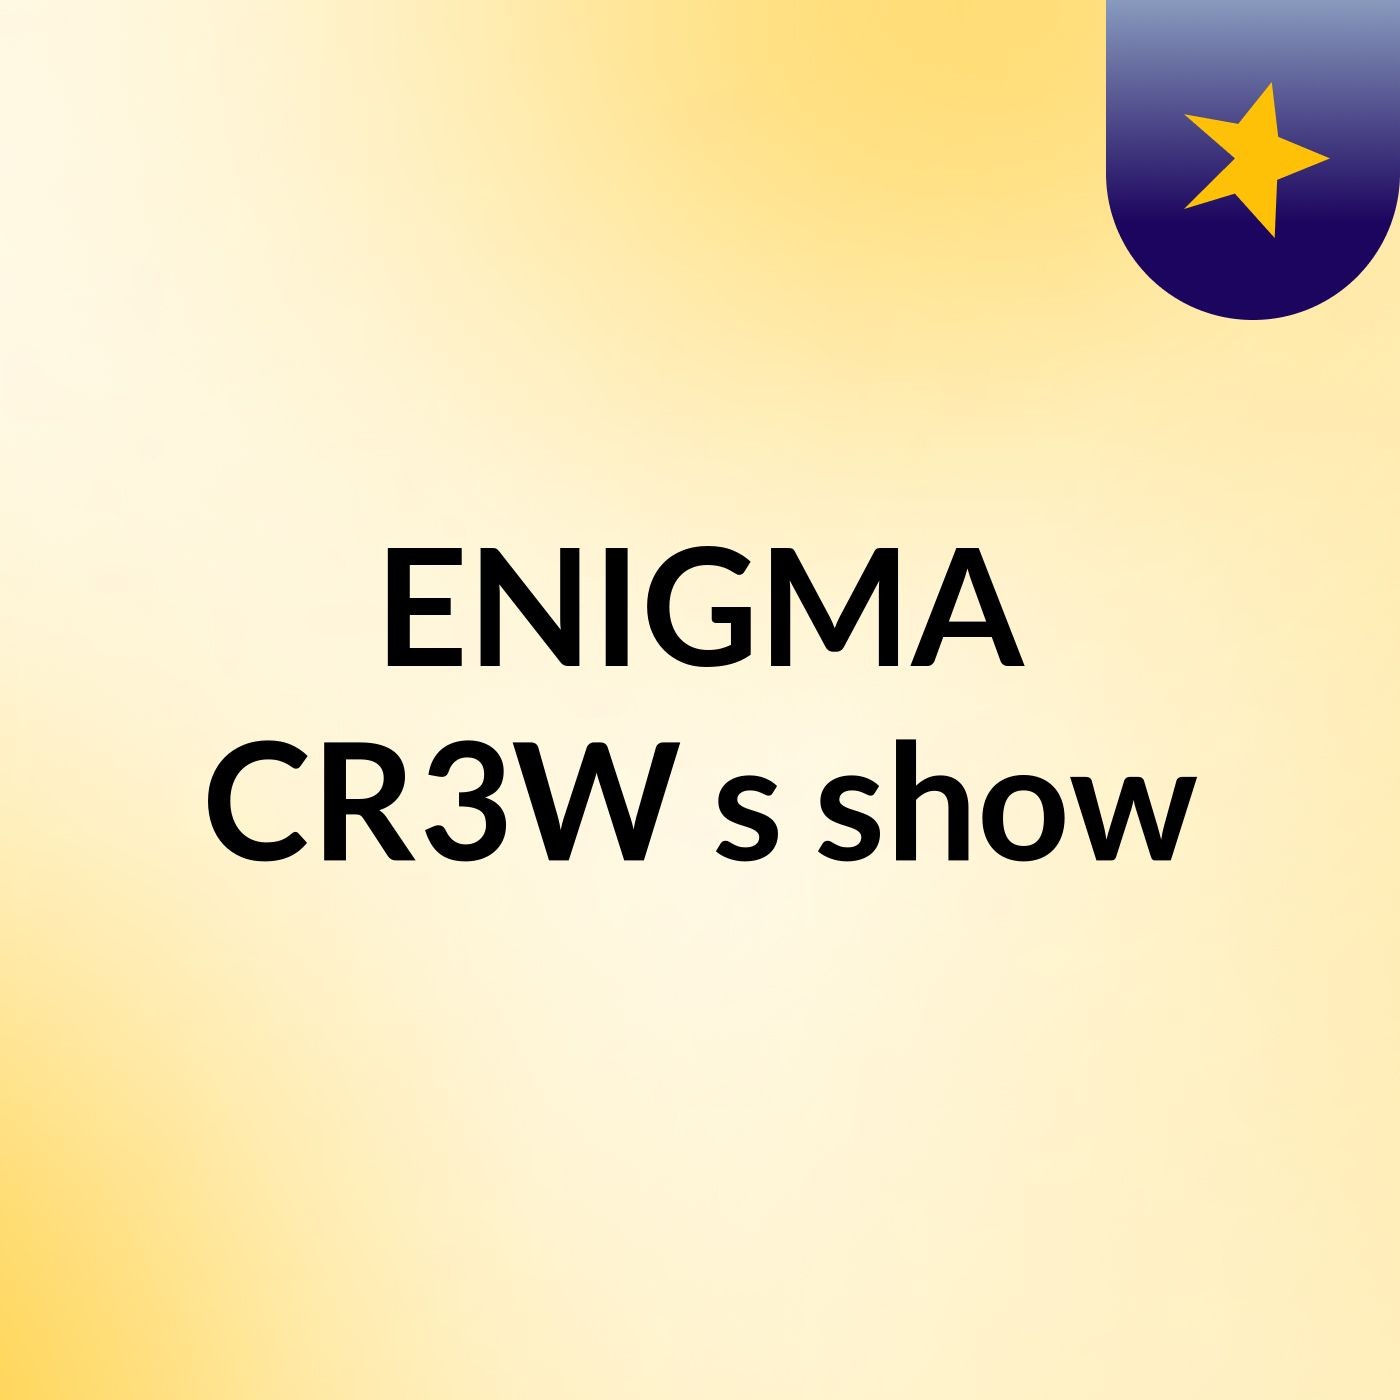 ENIGMA CR3W's show